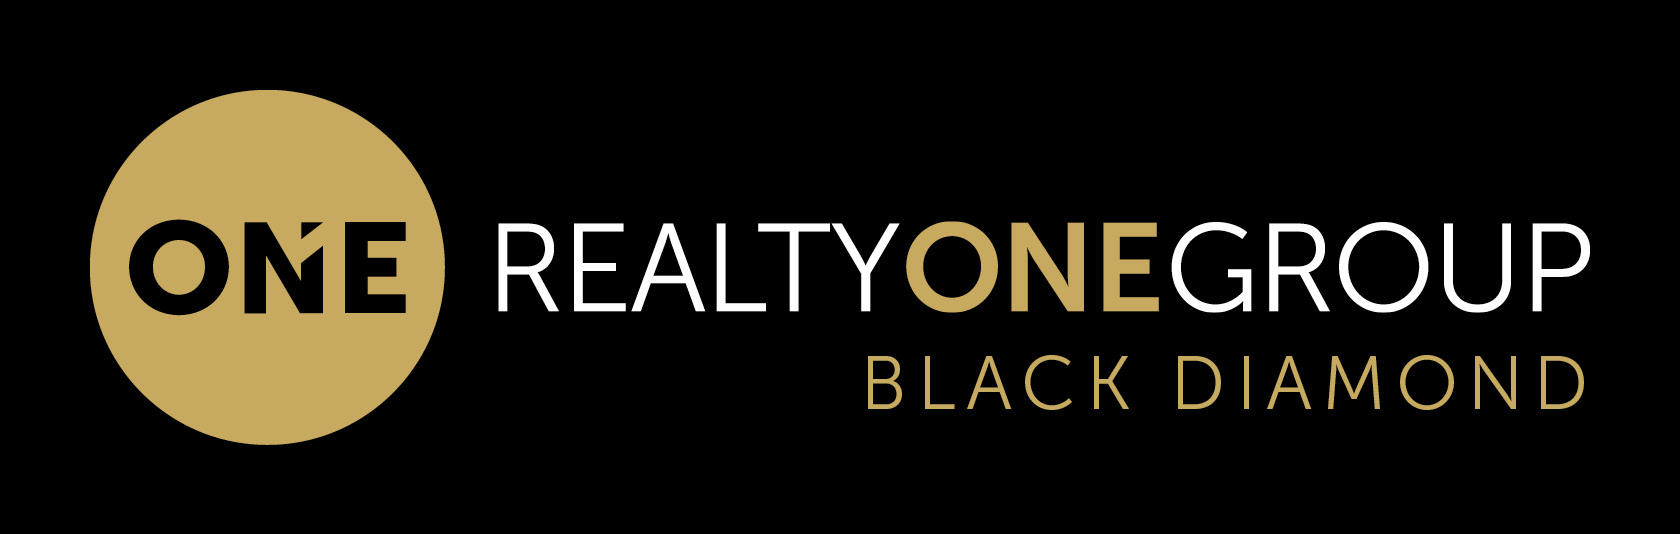 Realty ONE Group Black Diamond's Image